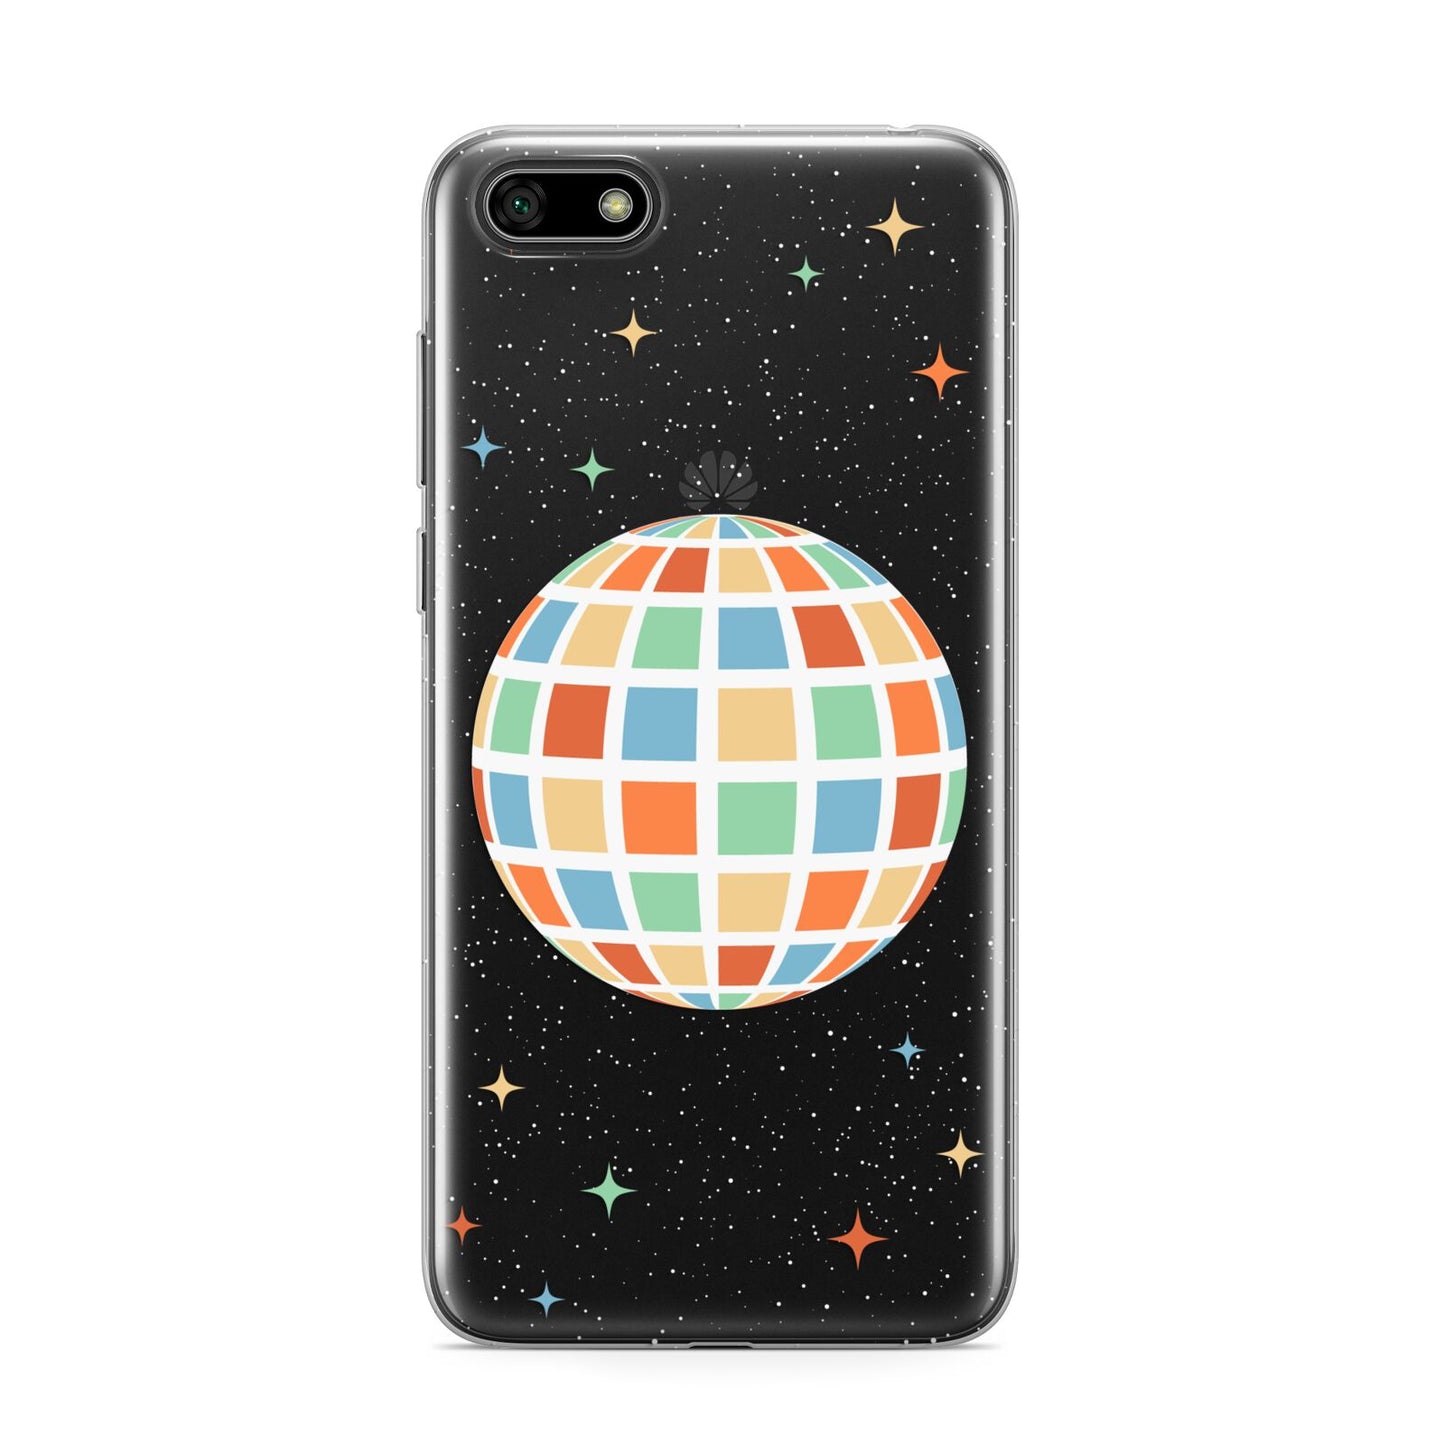 Disco Ball Huawei Y5 Prime 2018 Phone Case